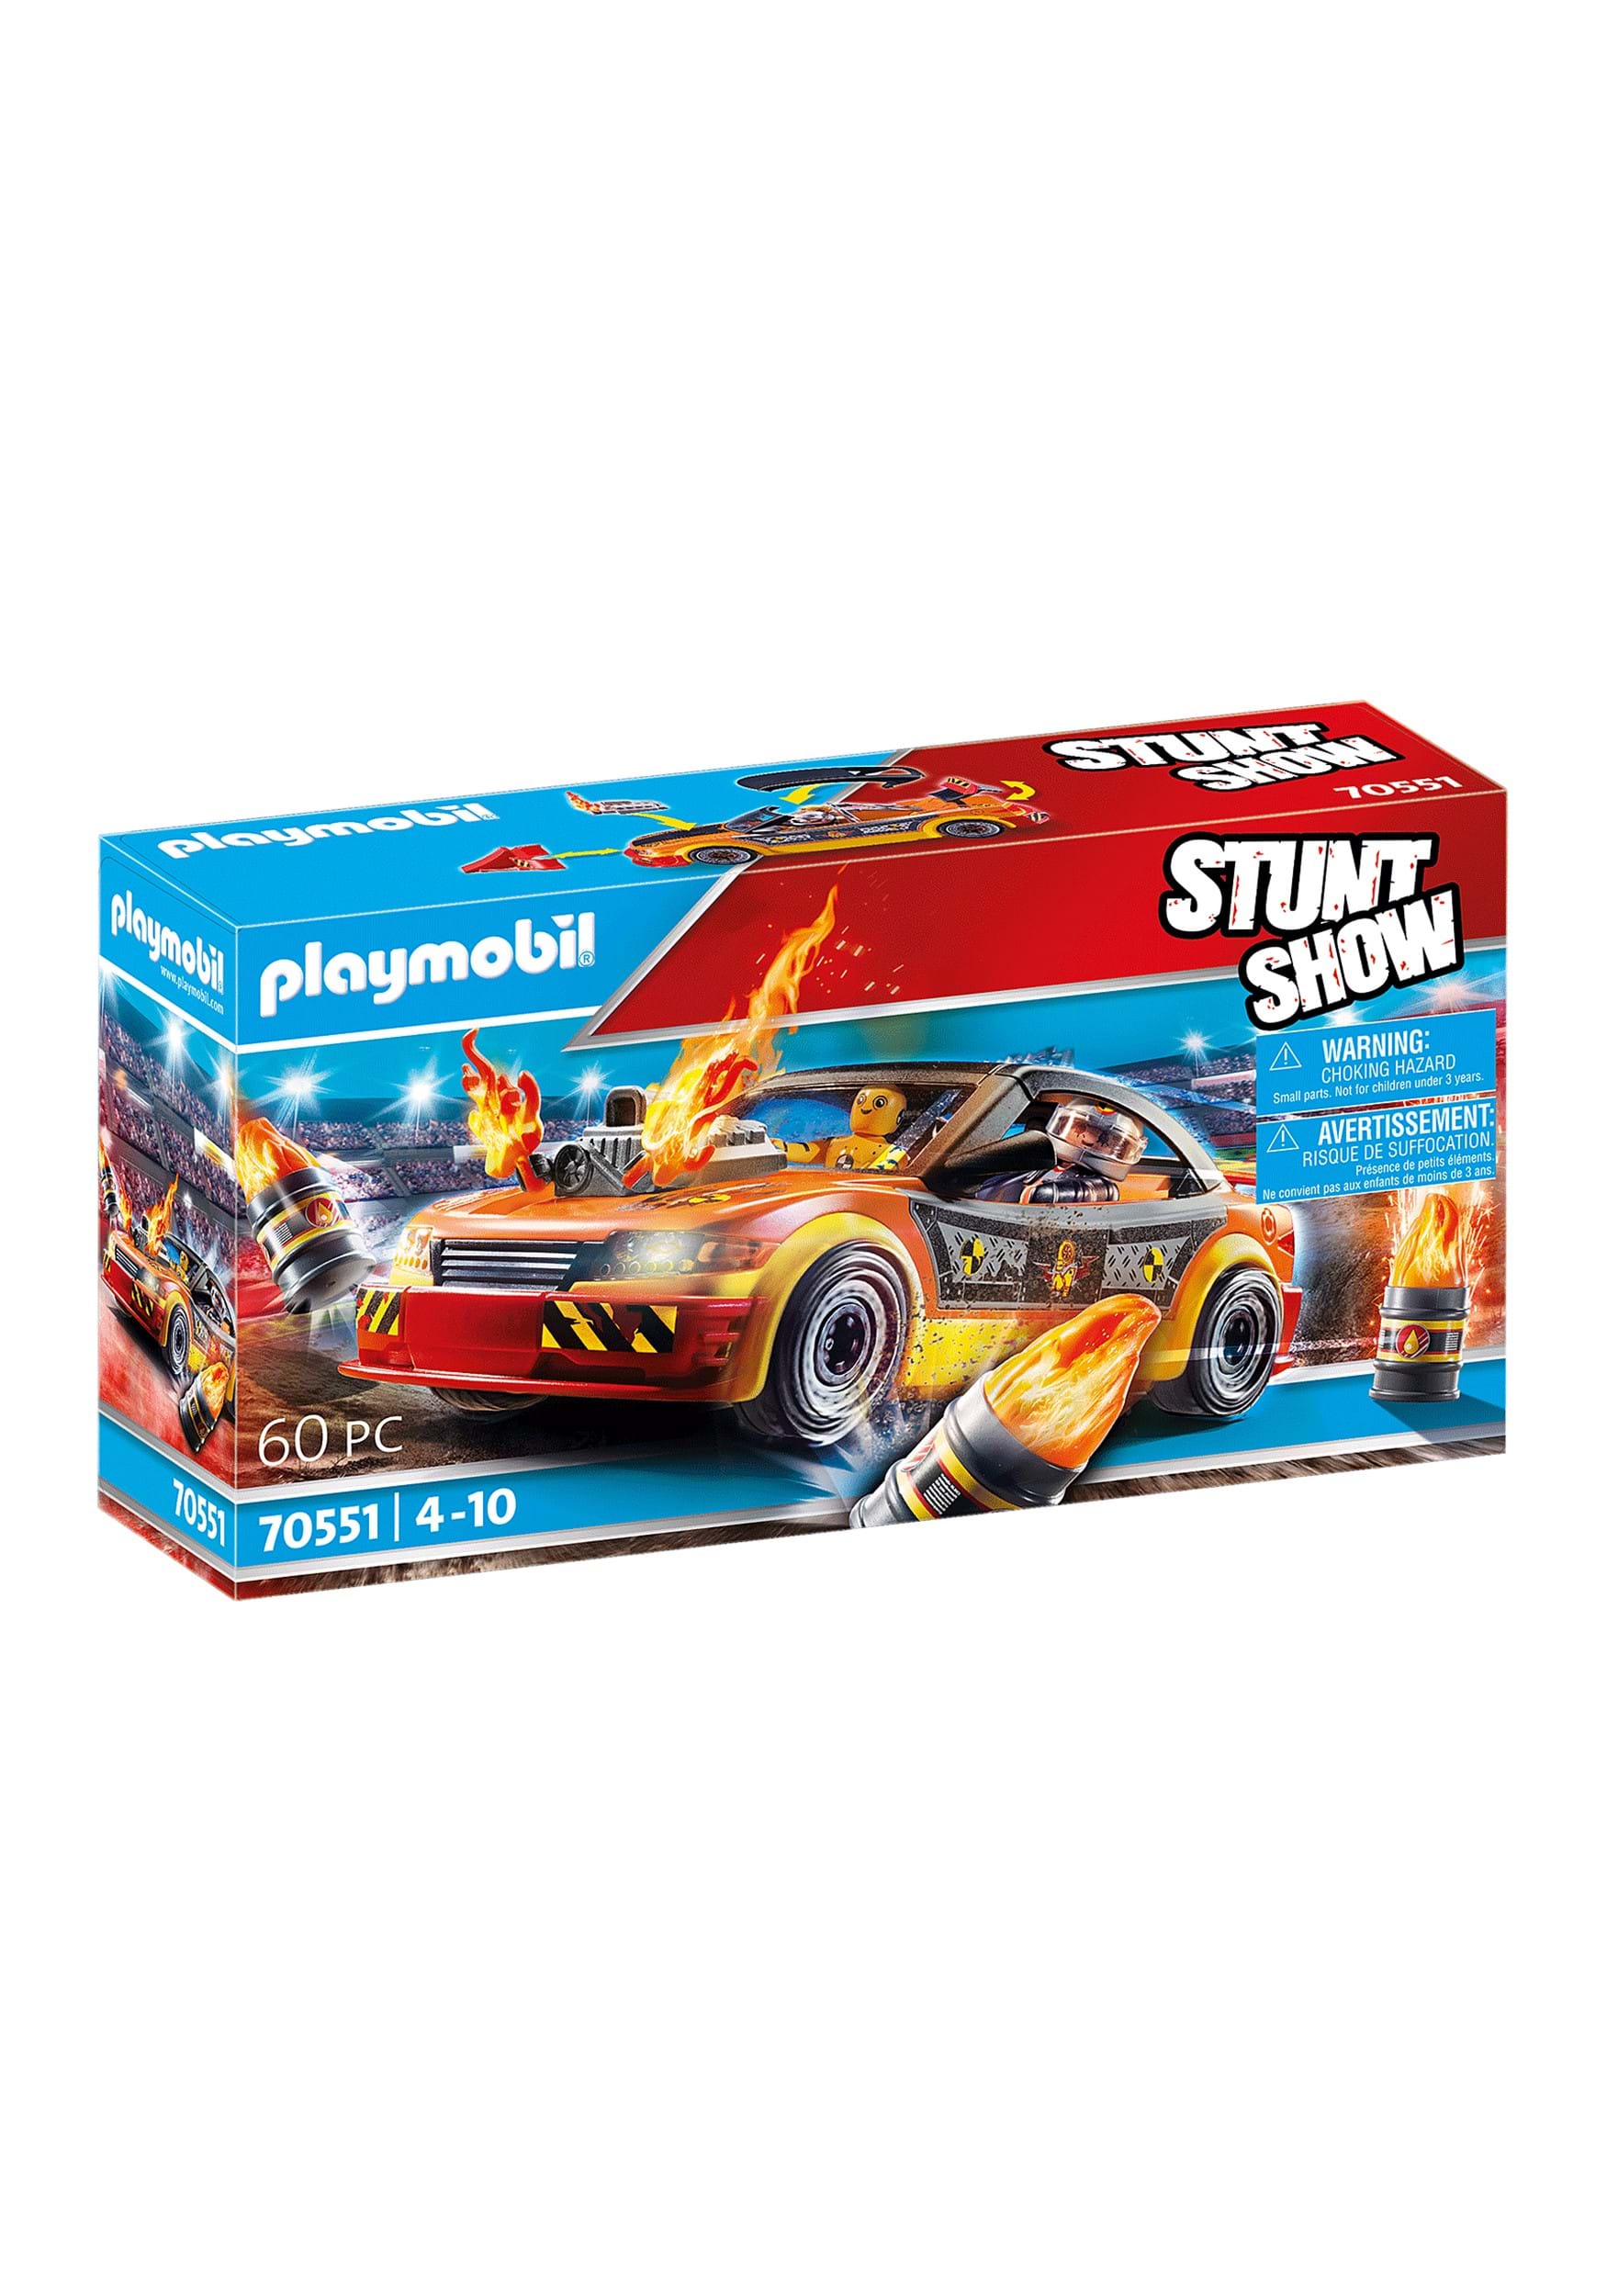 Stunt Show Crash Car Playmobil Playset